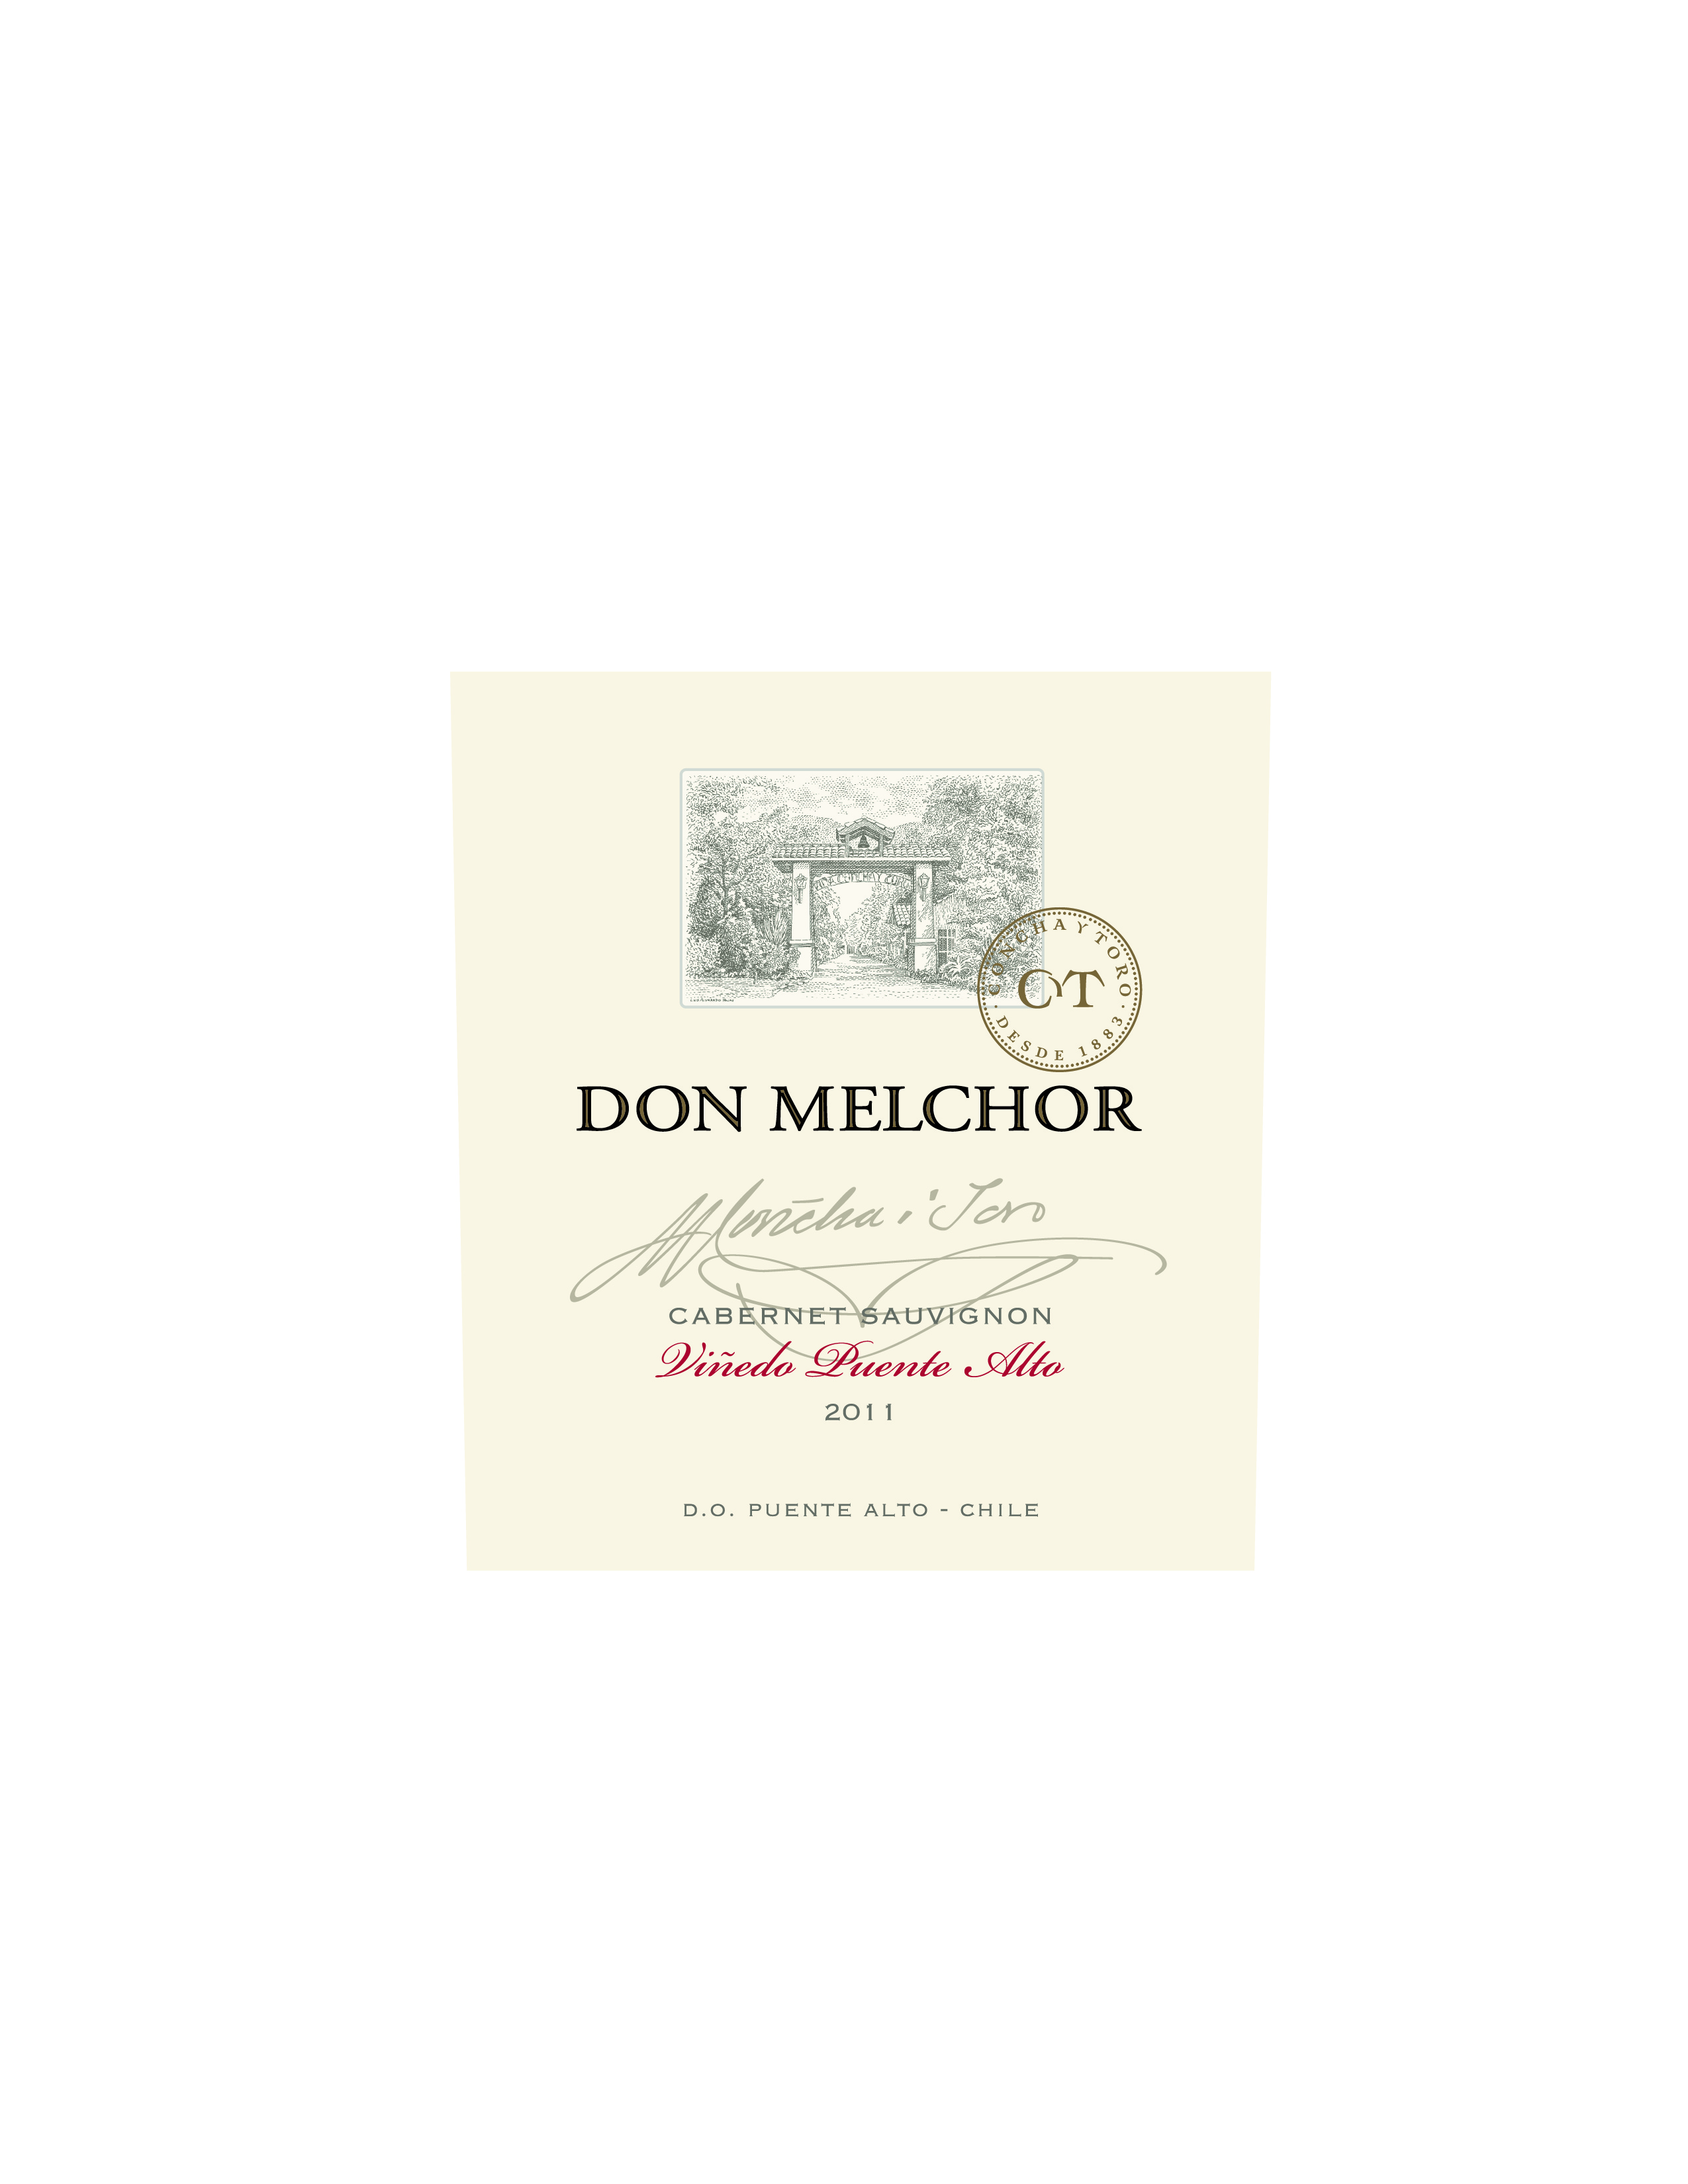 2016 Concha Y Toro  Don Melchor Cabernet Sauvignon Chile - click image for full description